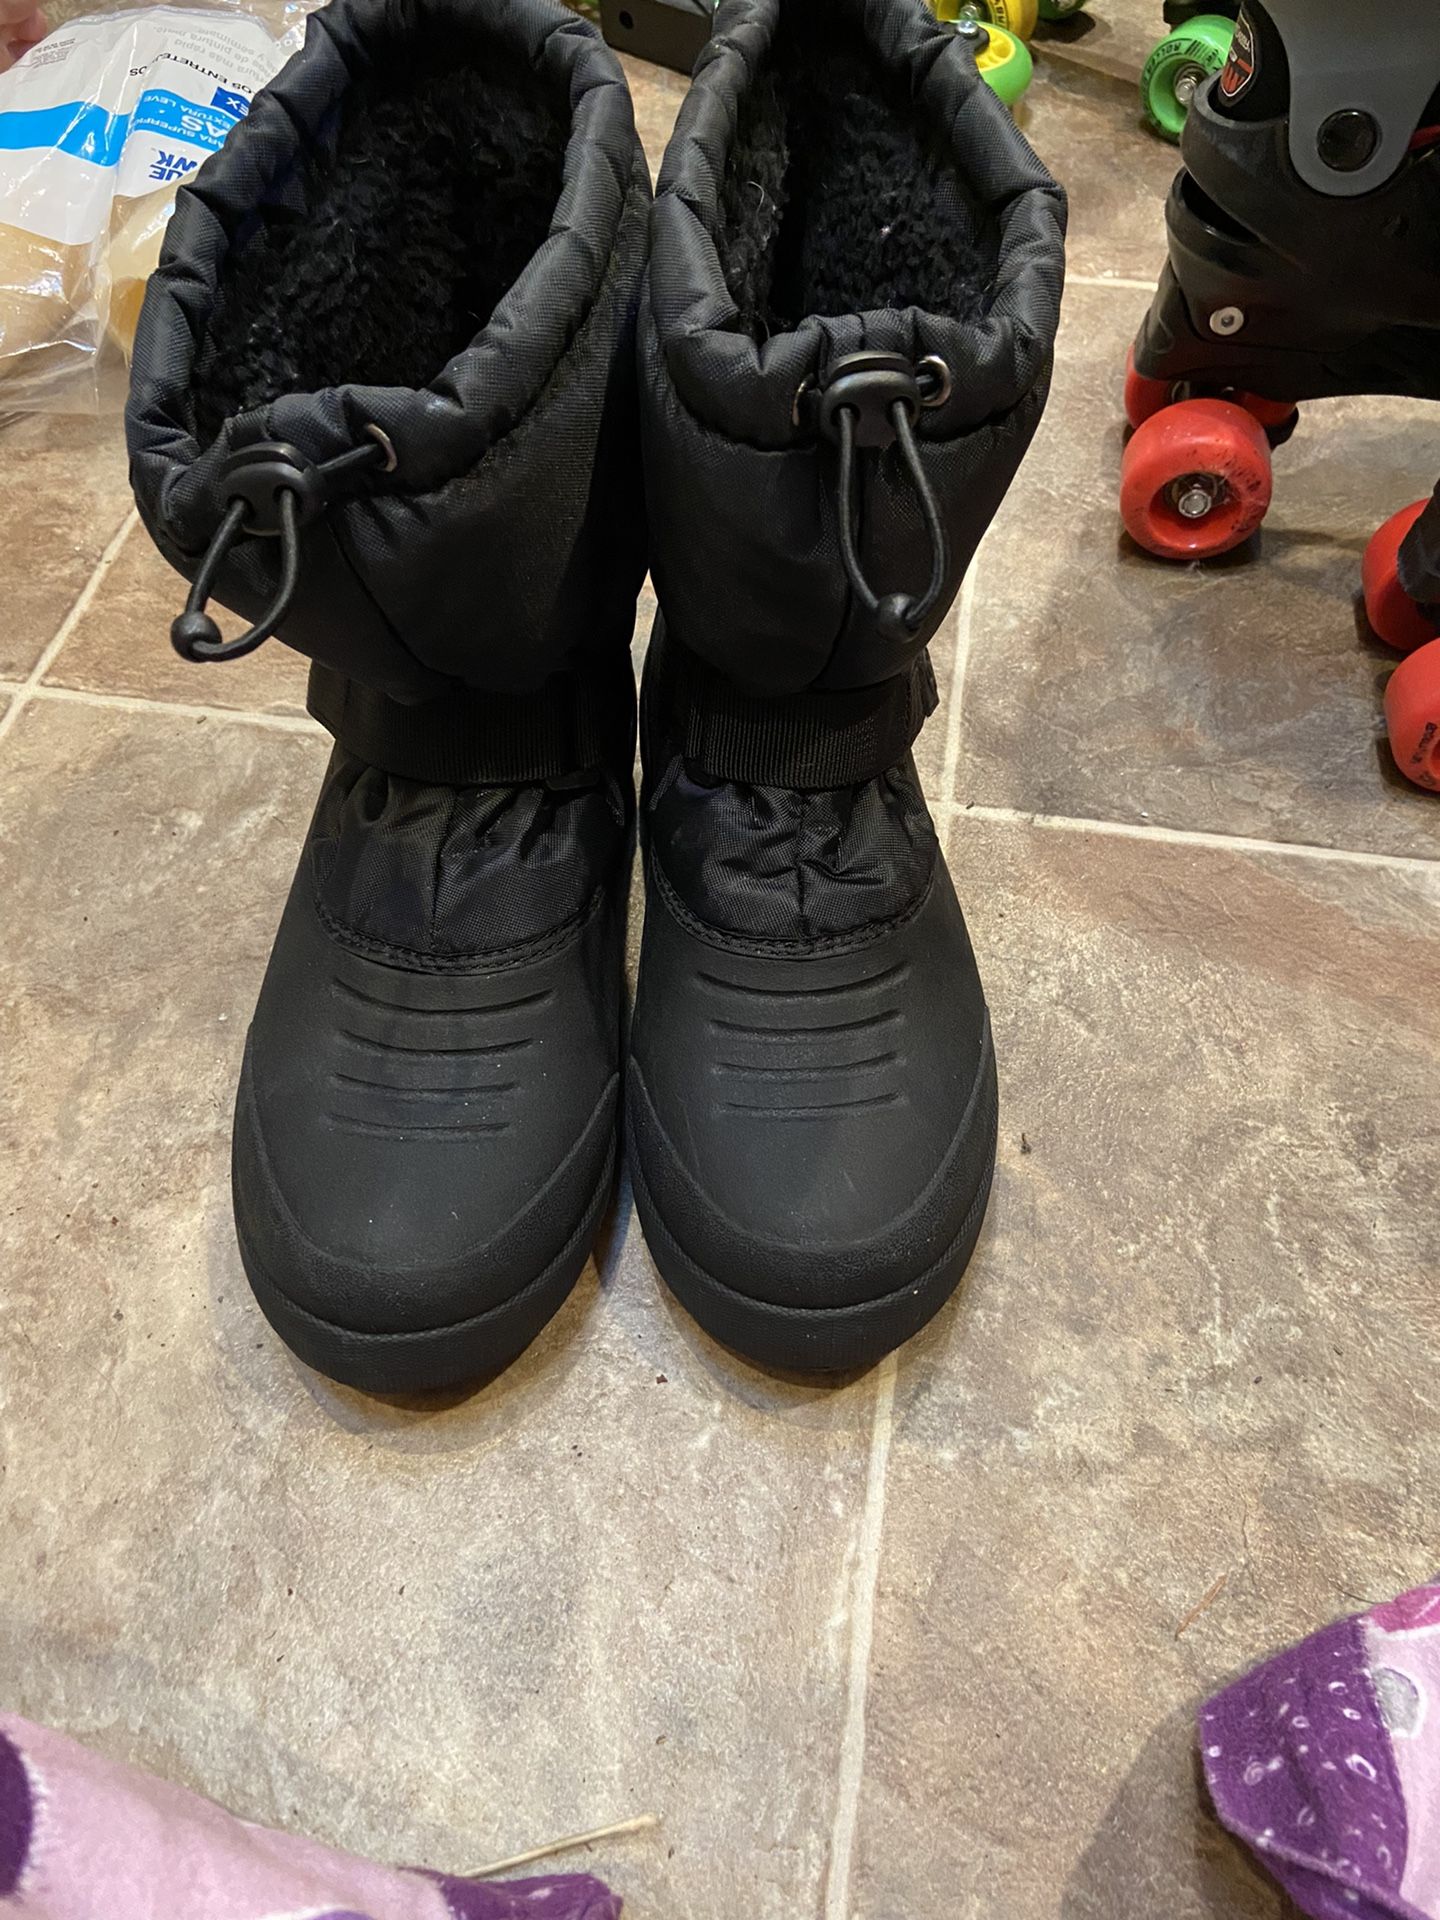 Kids Size 7 Snow Boots 